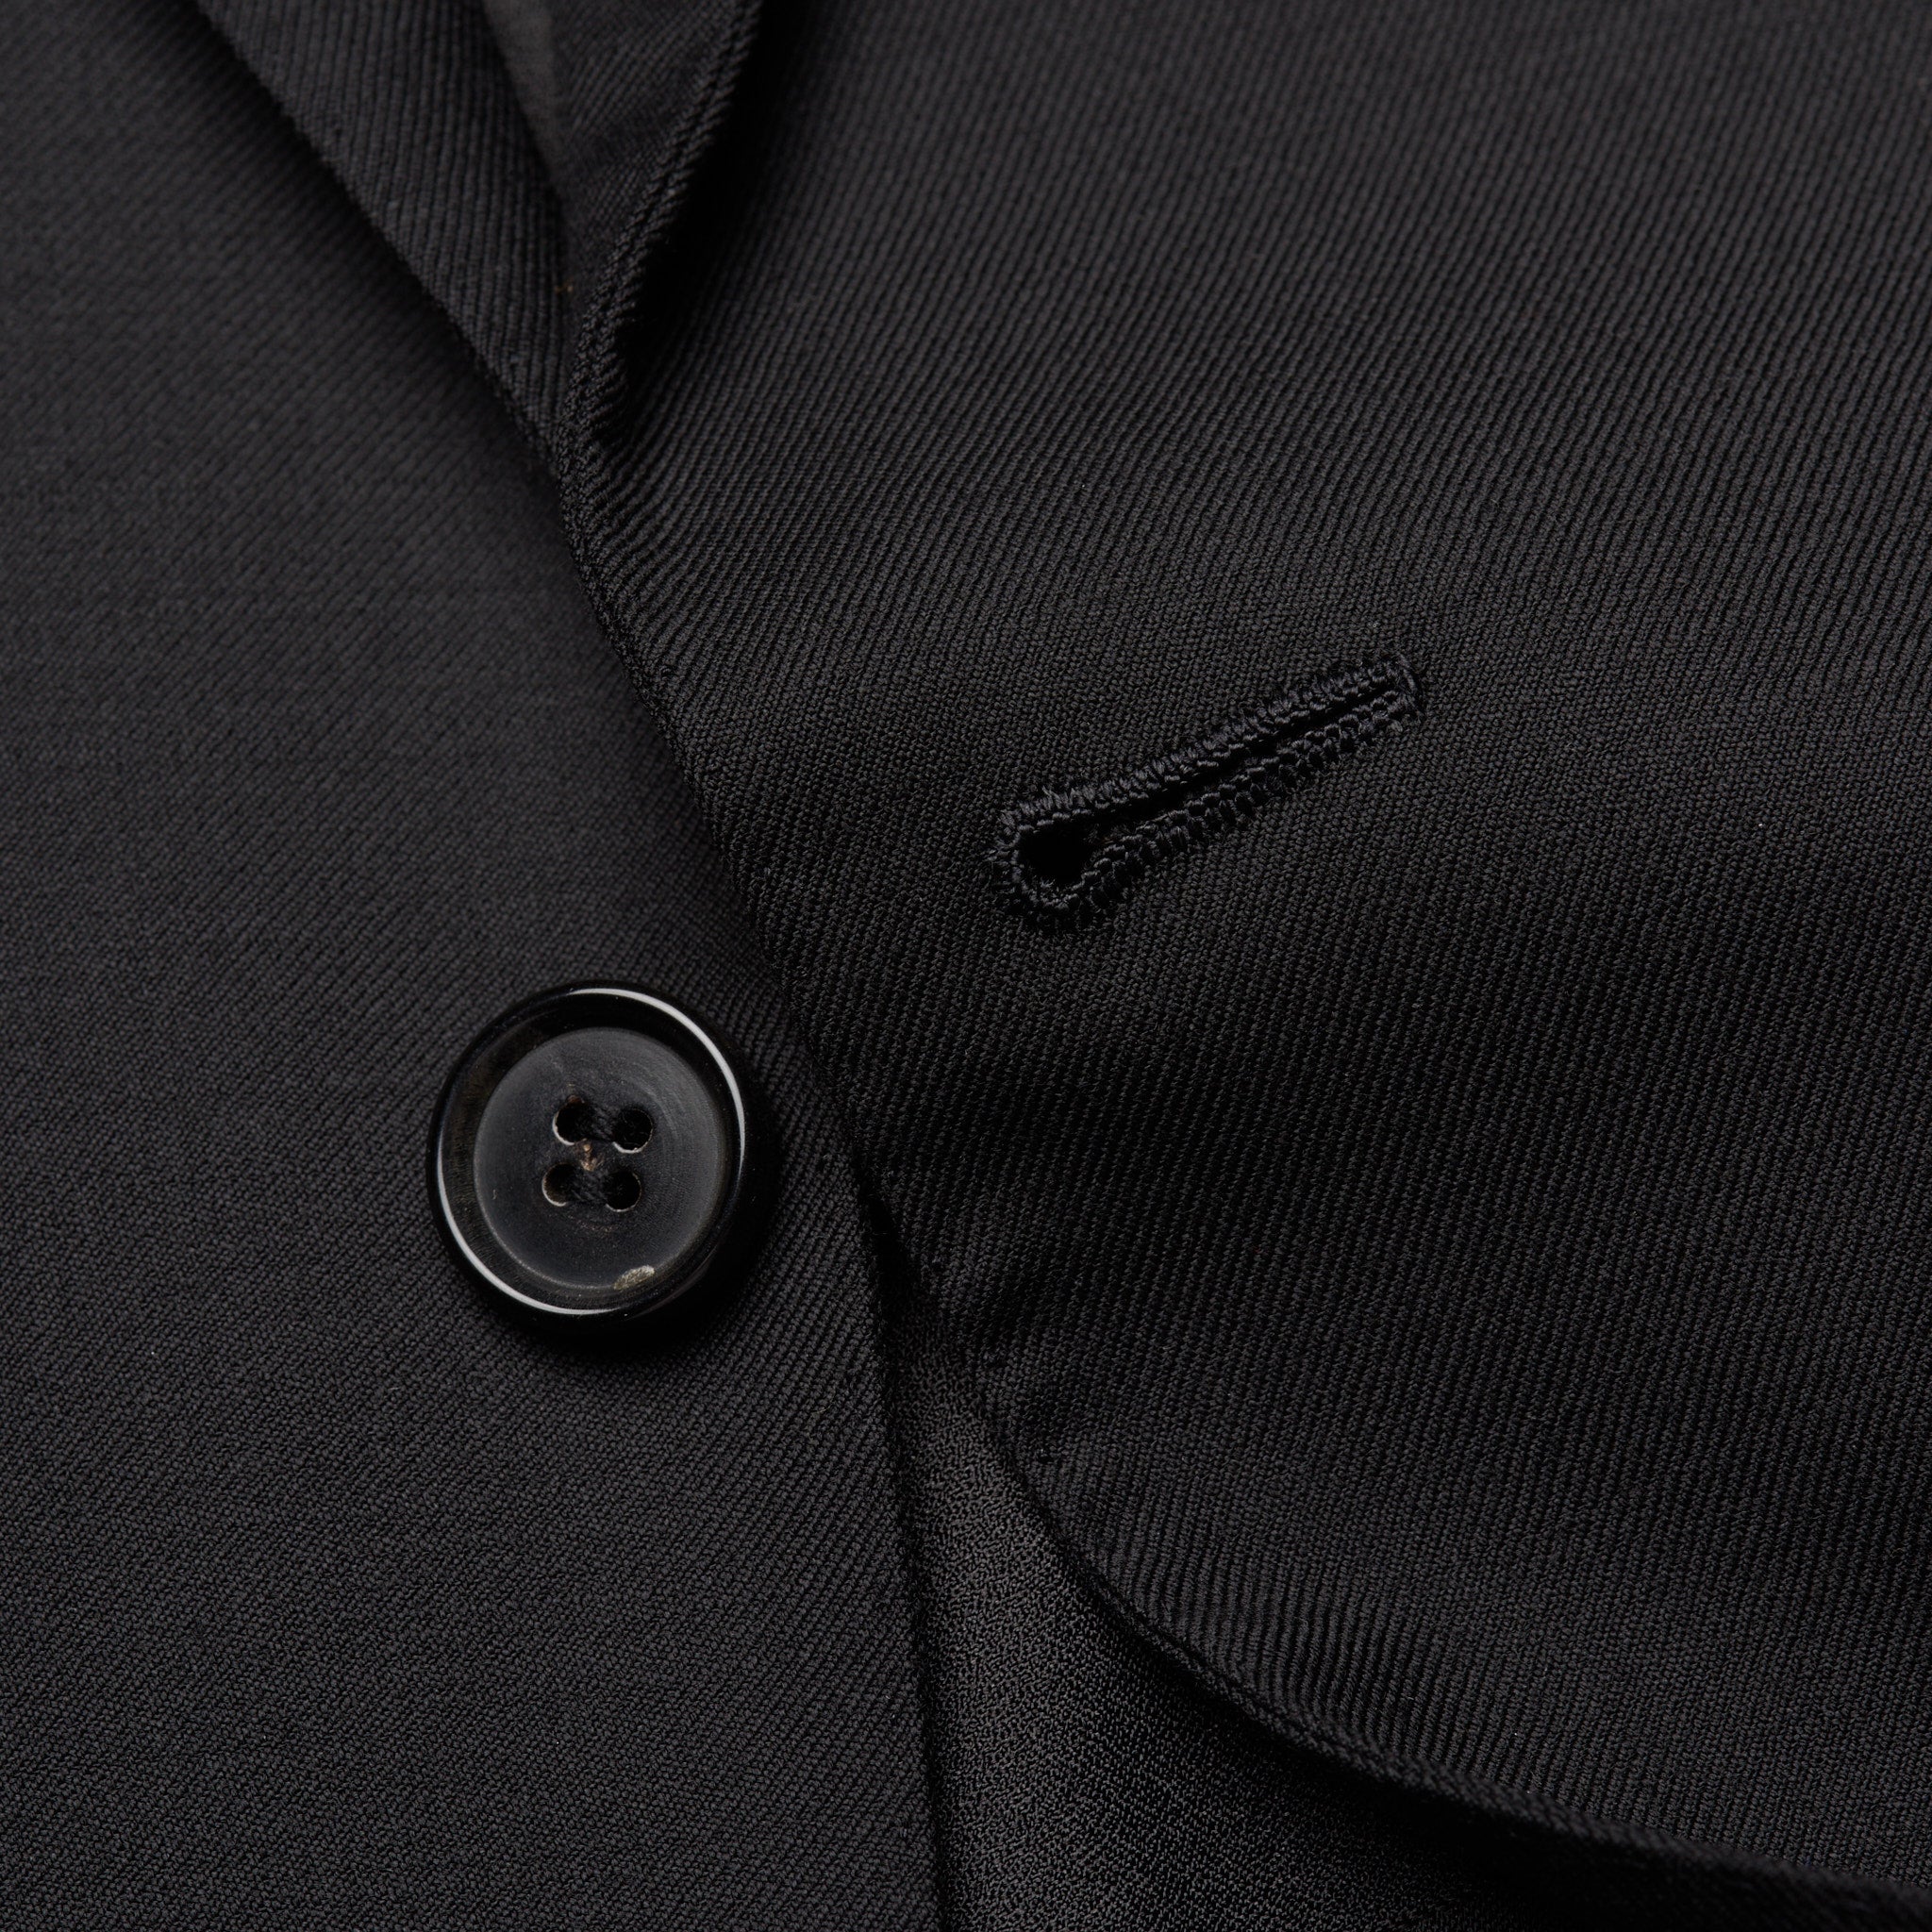 D'AVENZA for FERU Handmade Black Wool Elegant Suit EU 50 NEW US 40